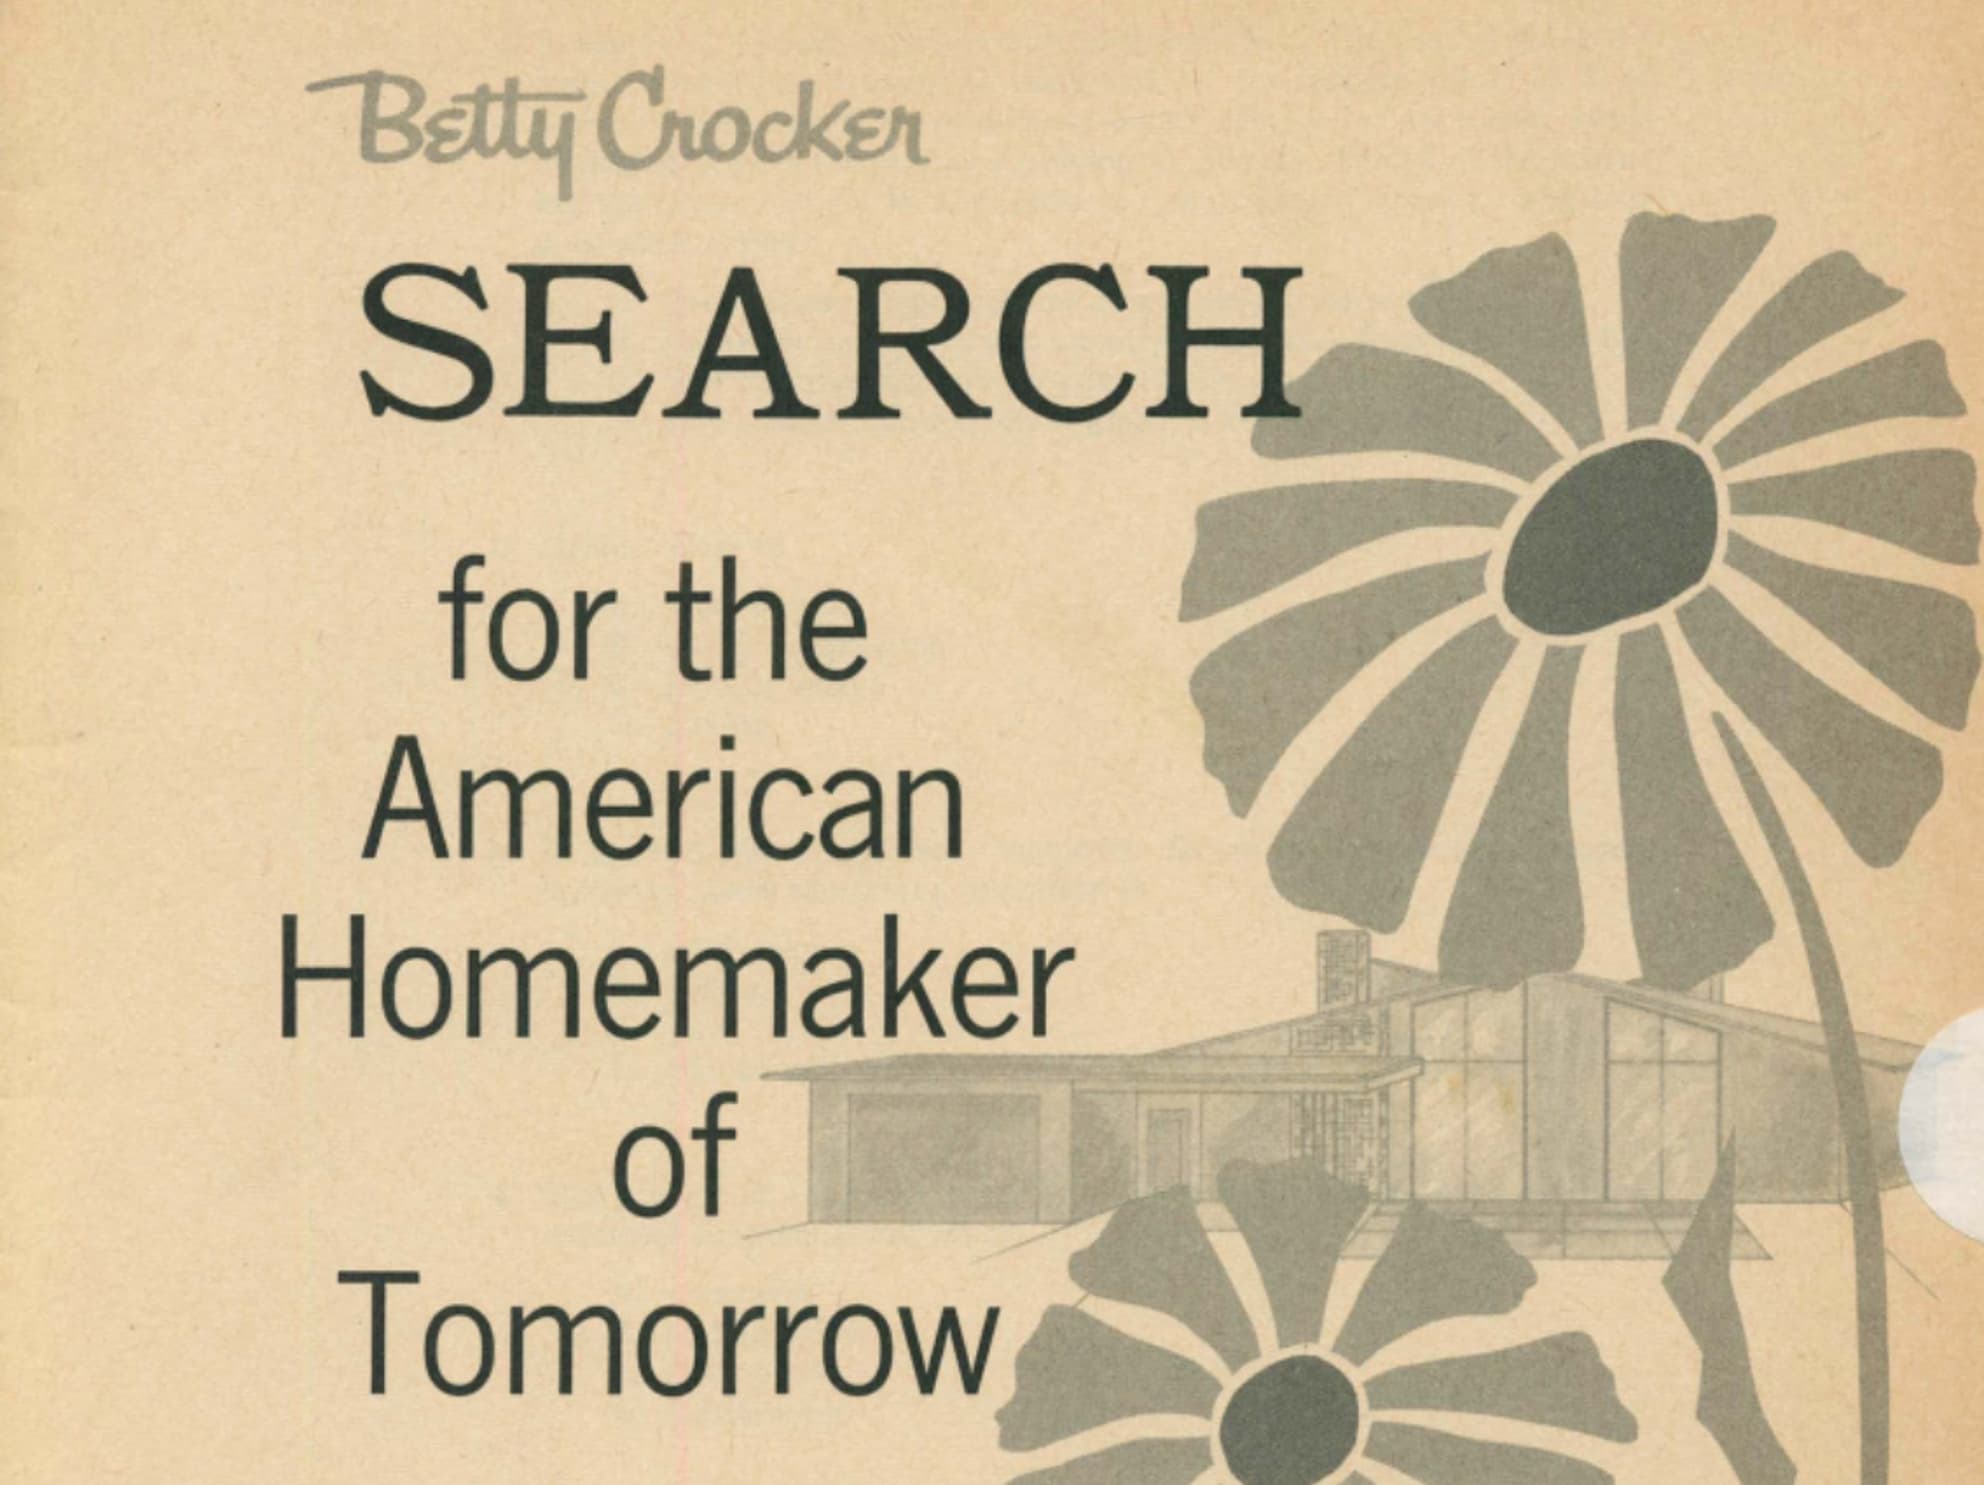 Betty Crocker Homemaker of Tomorrow test